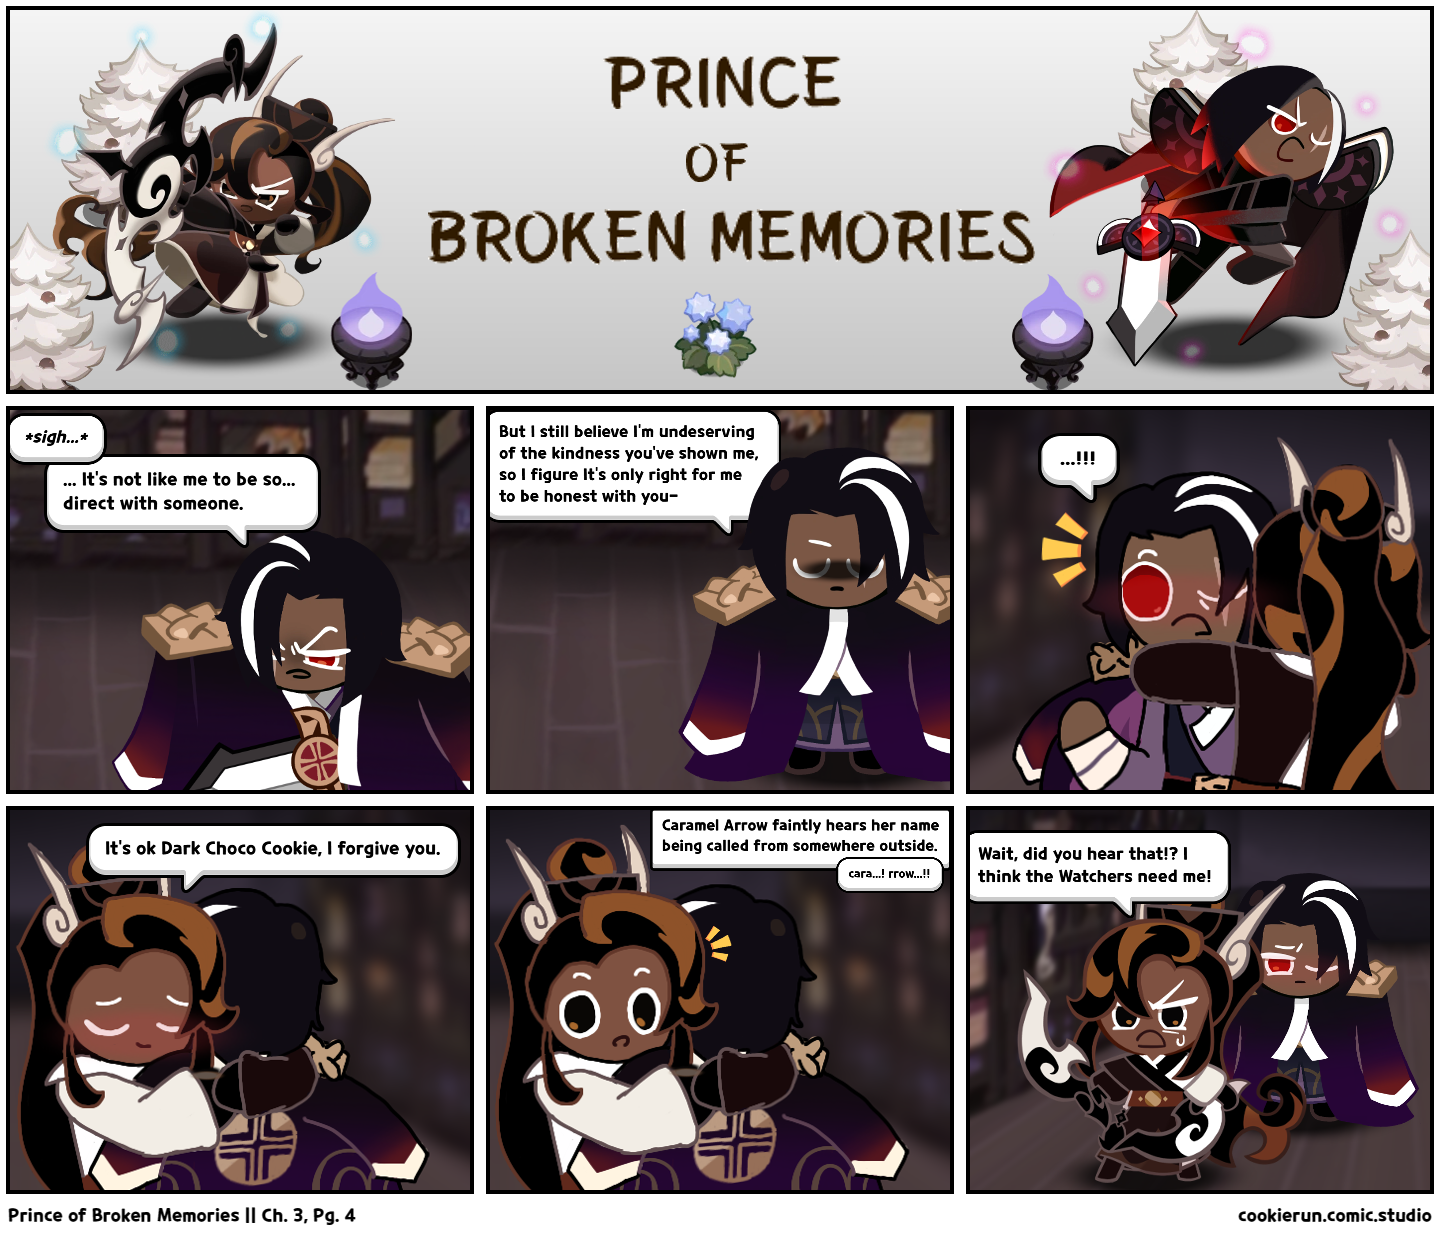 Prince of Broken Memories || Ch. 3, Pg. 4